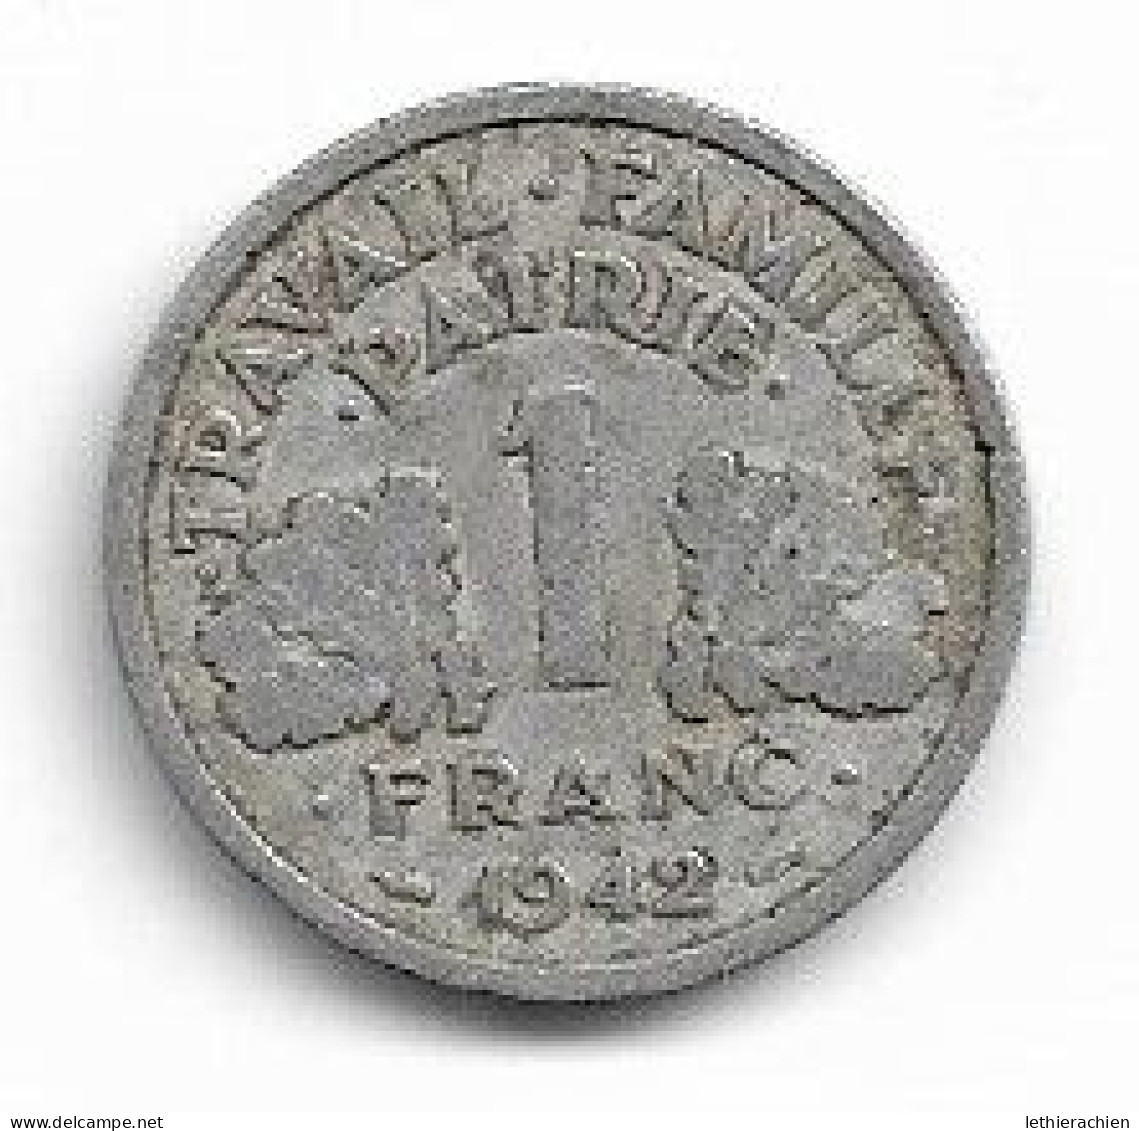 1 Franc 1942 - 1 Franc